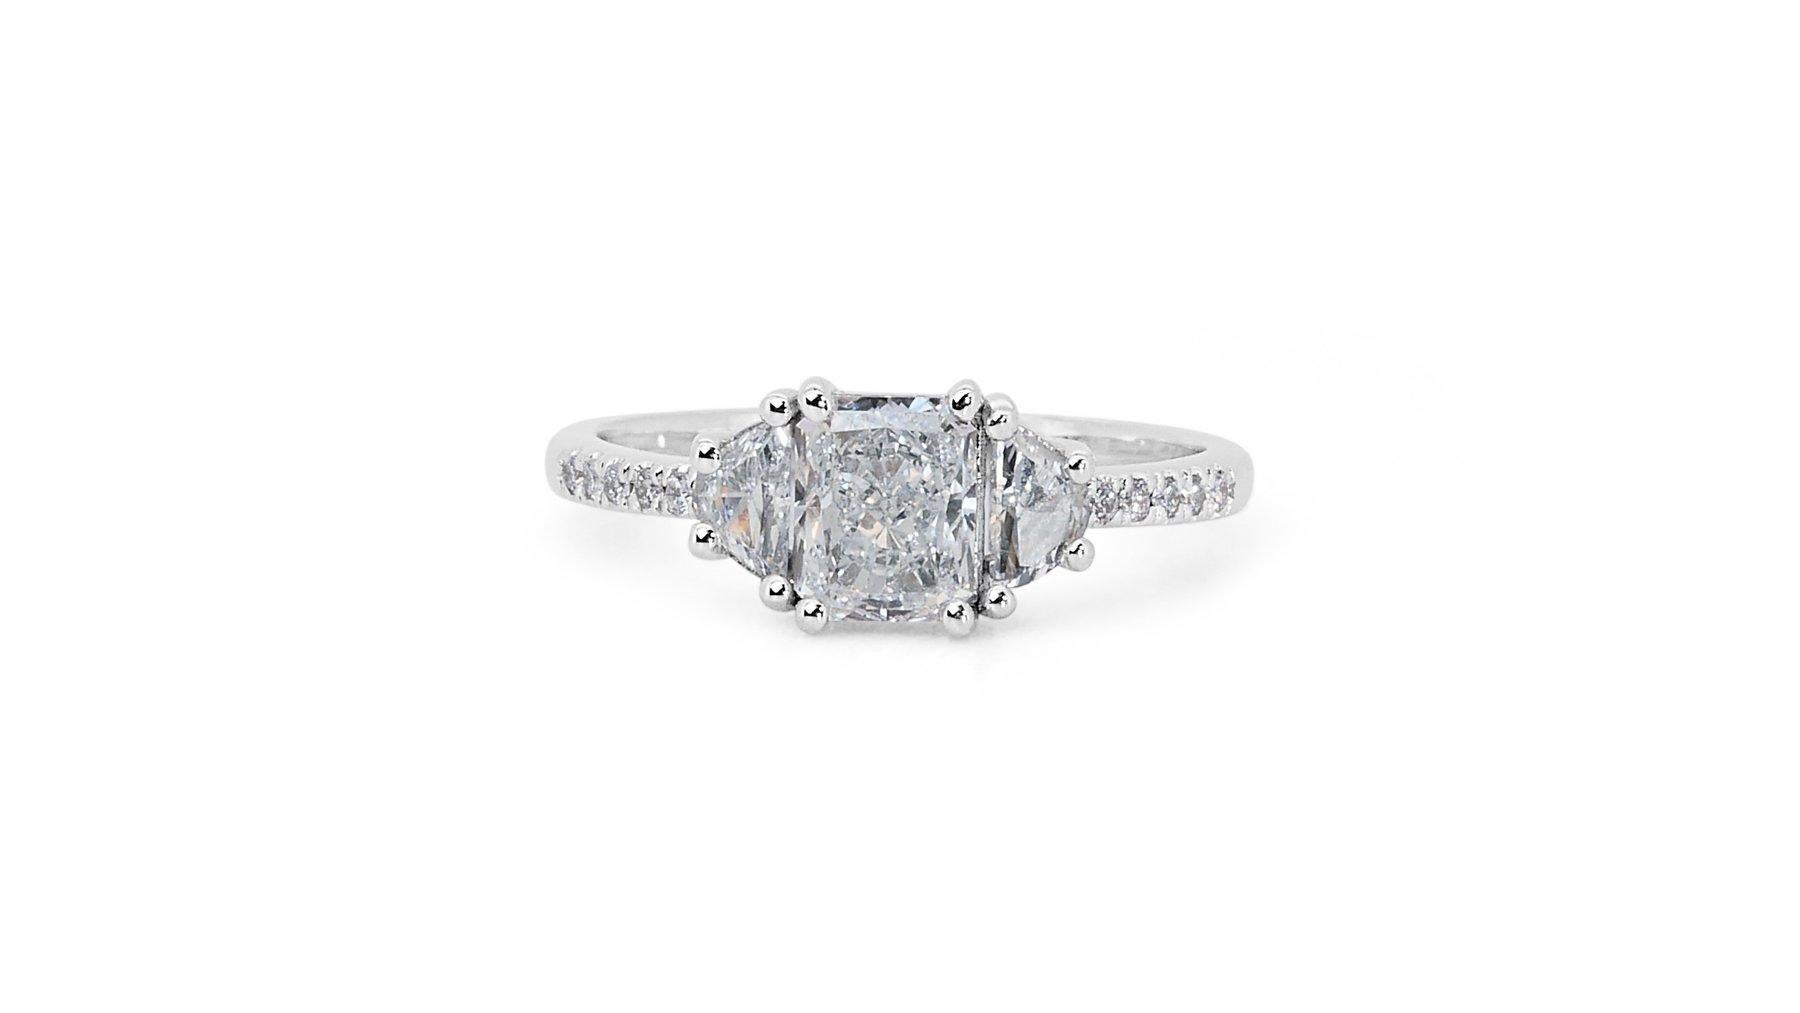 Elegant 1.32ct Diamond Pave Ring in 18K White Gold - GIA Certified 3